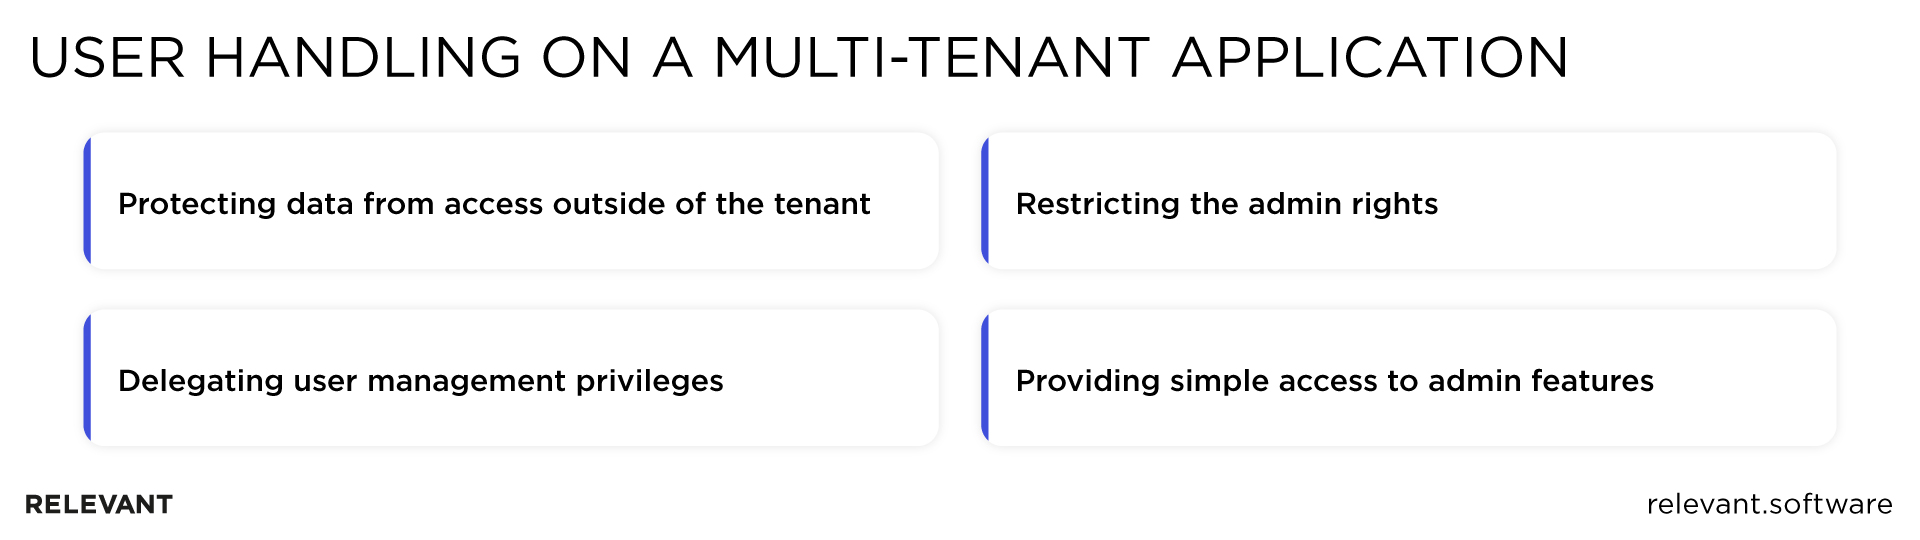 User handling on a multi-tenant application